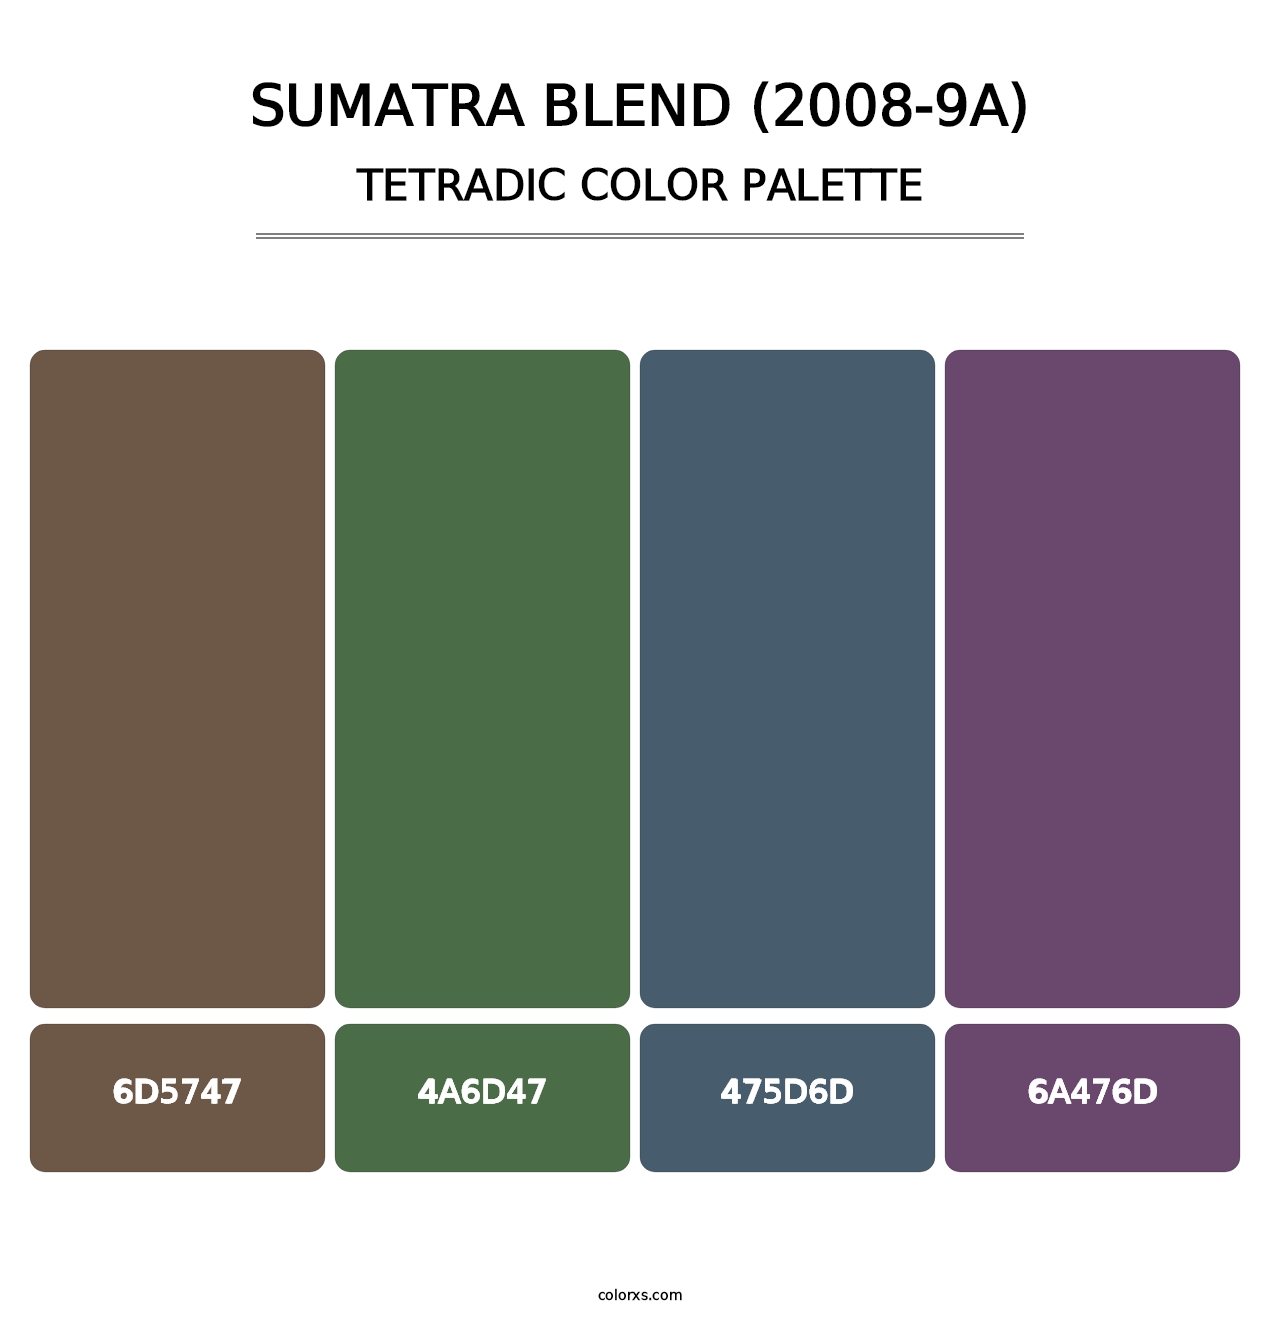 Sumatra Blend (2008-9A) - Tetradic Color Palette